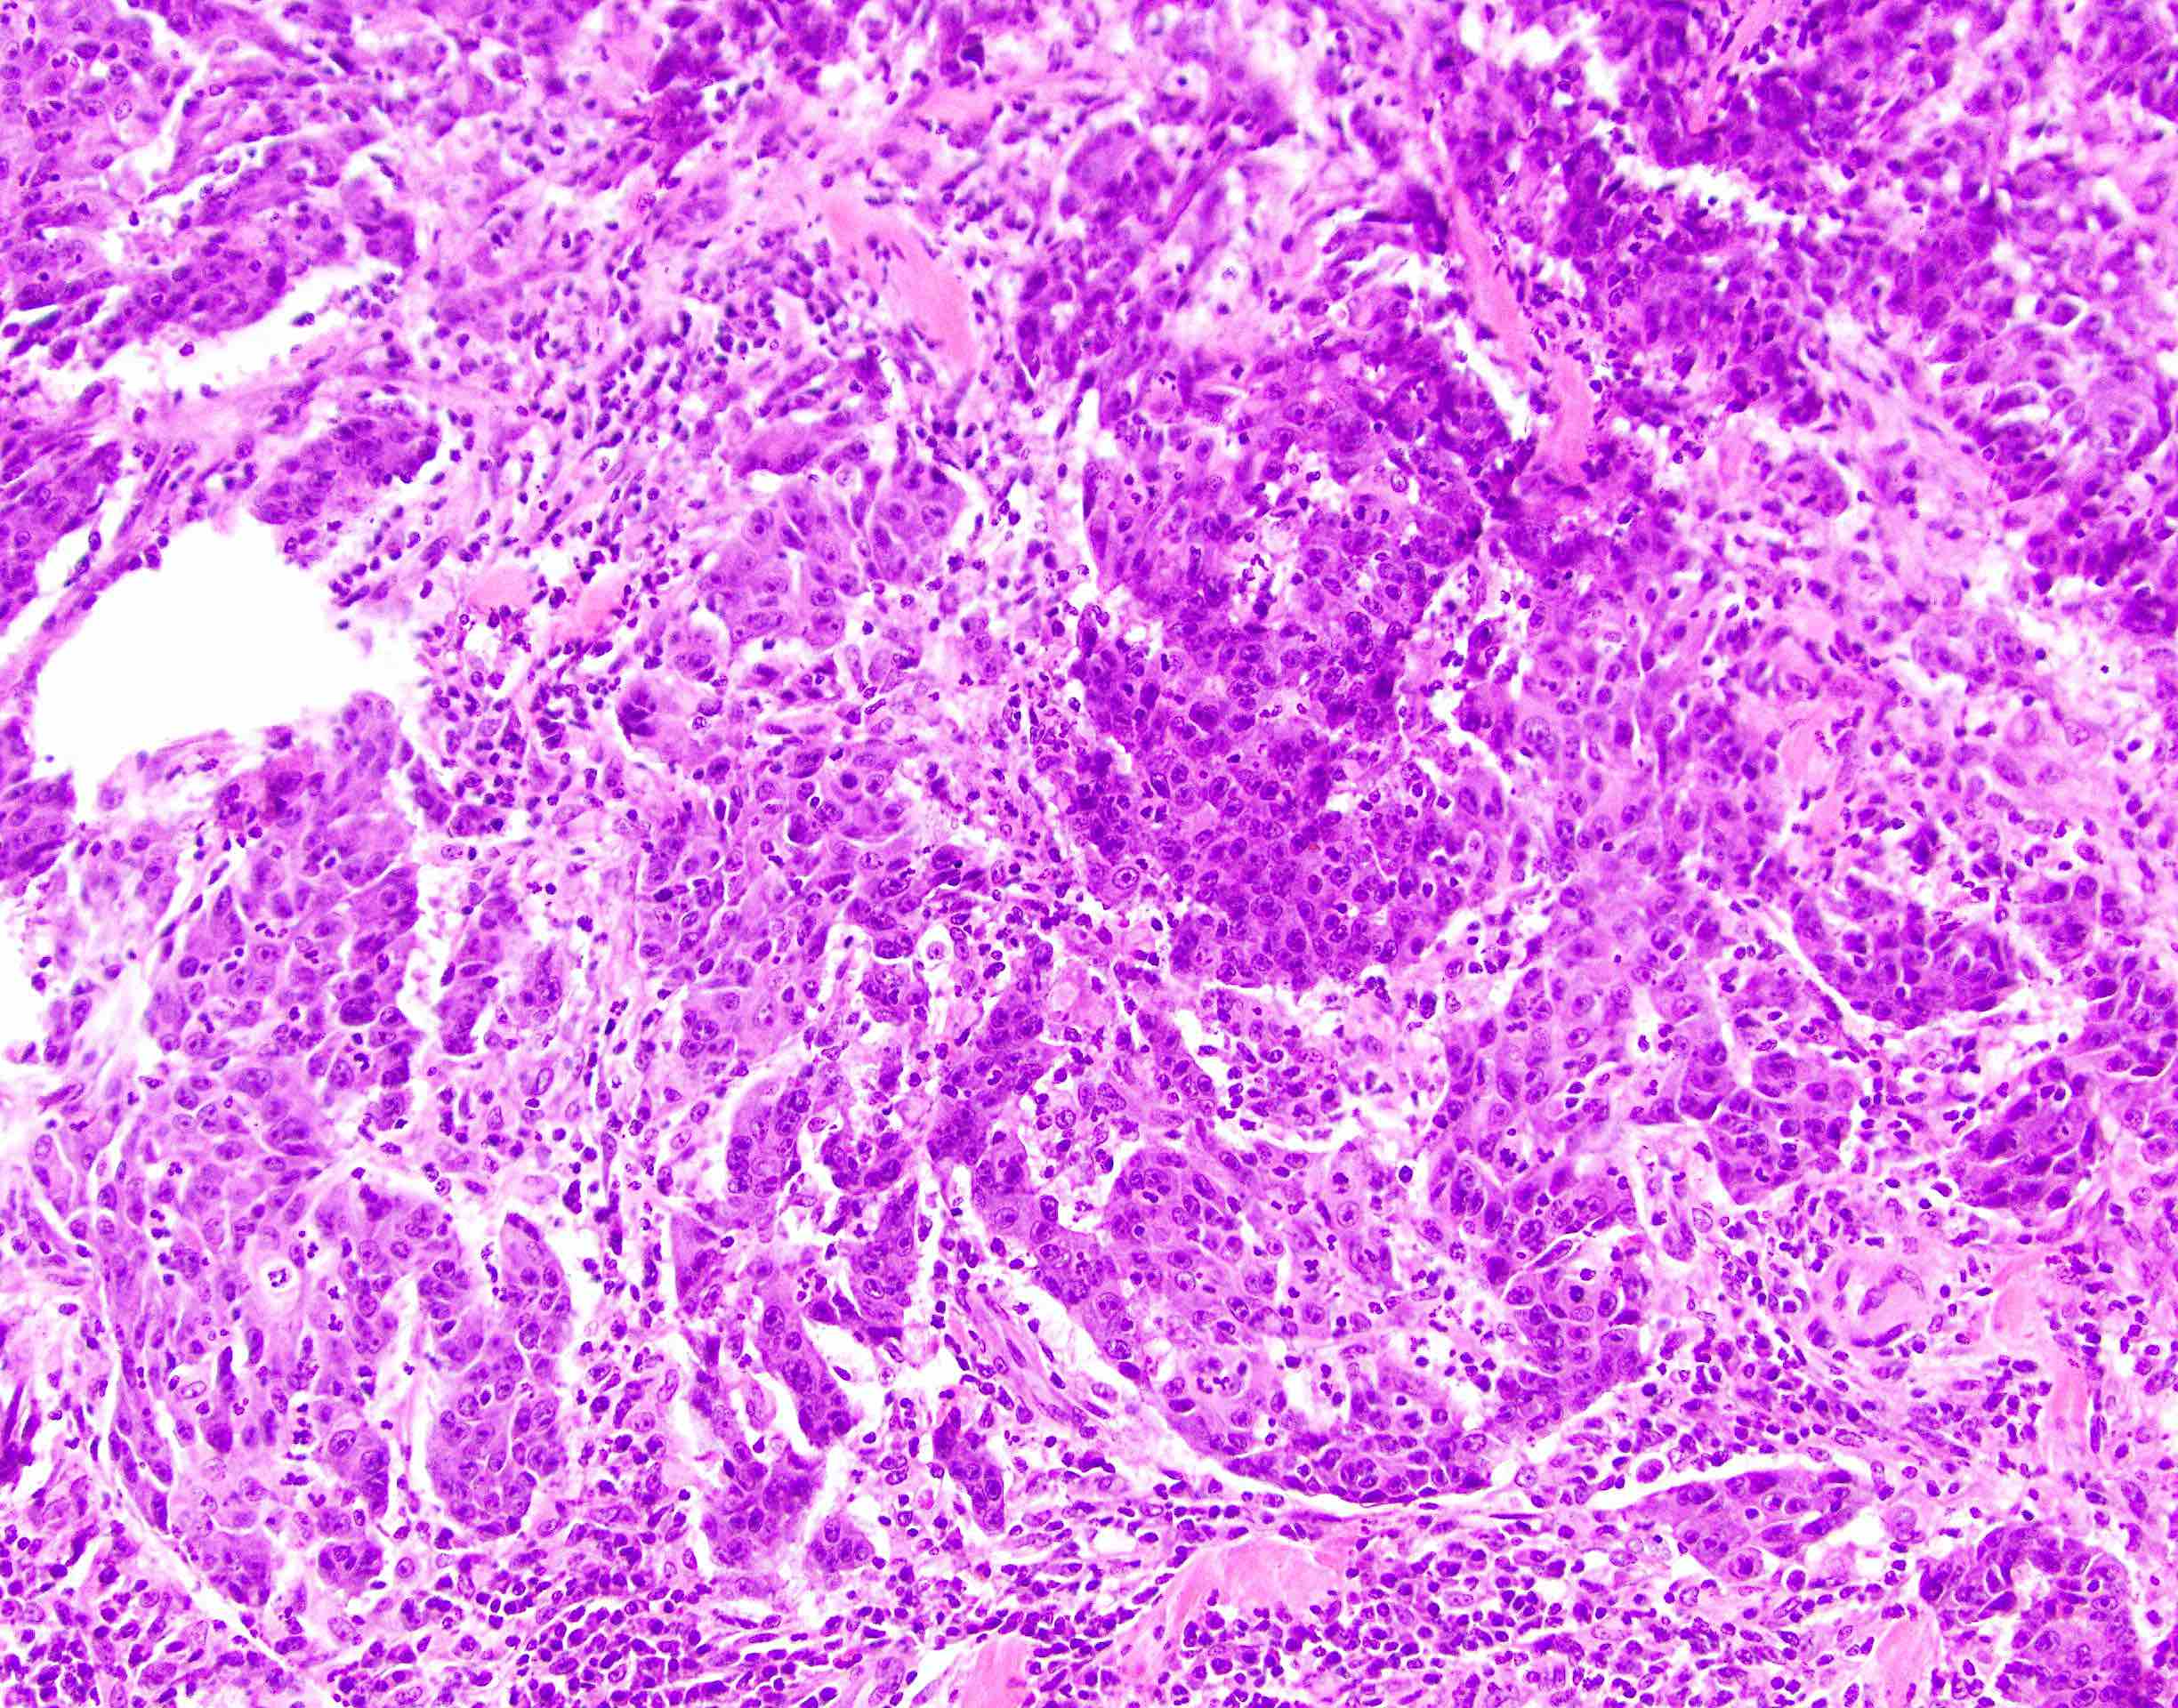 medullary carcinoma